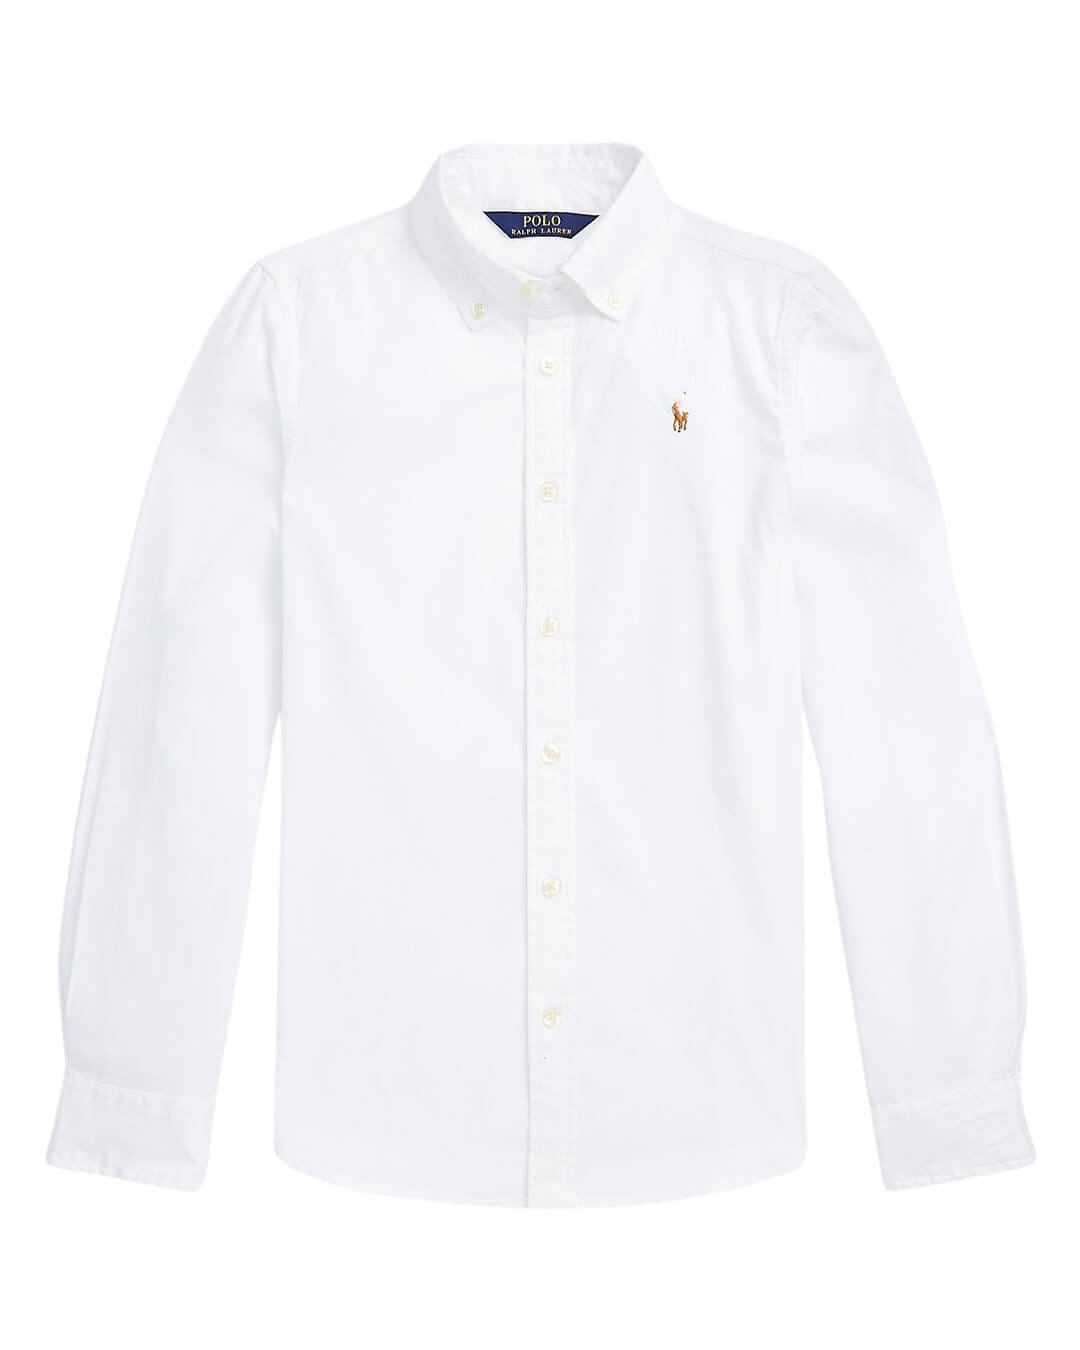 Polo Ralph Lauren Shirts Girls Polo Ralph Lauren White Ruffled Cotton Oxford Shirt